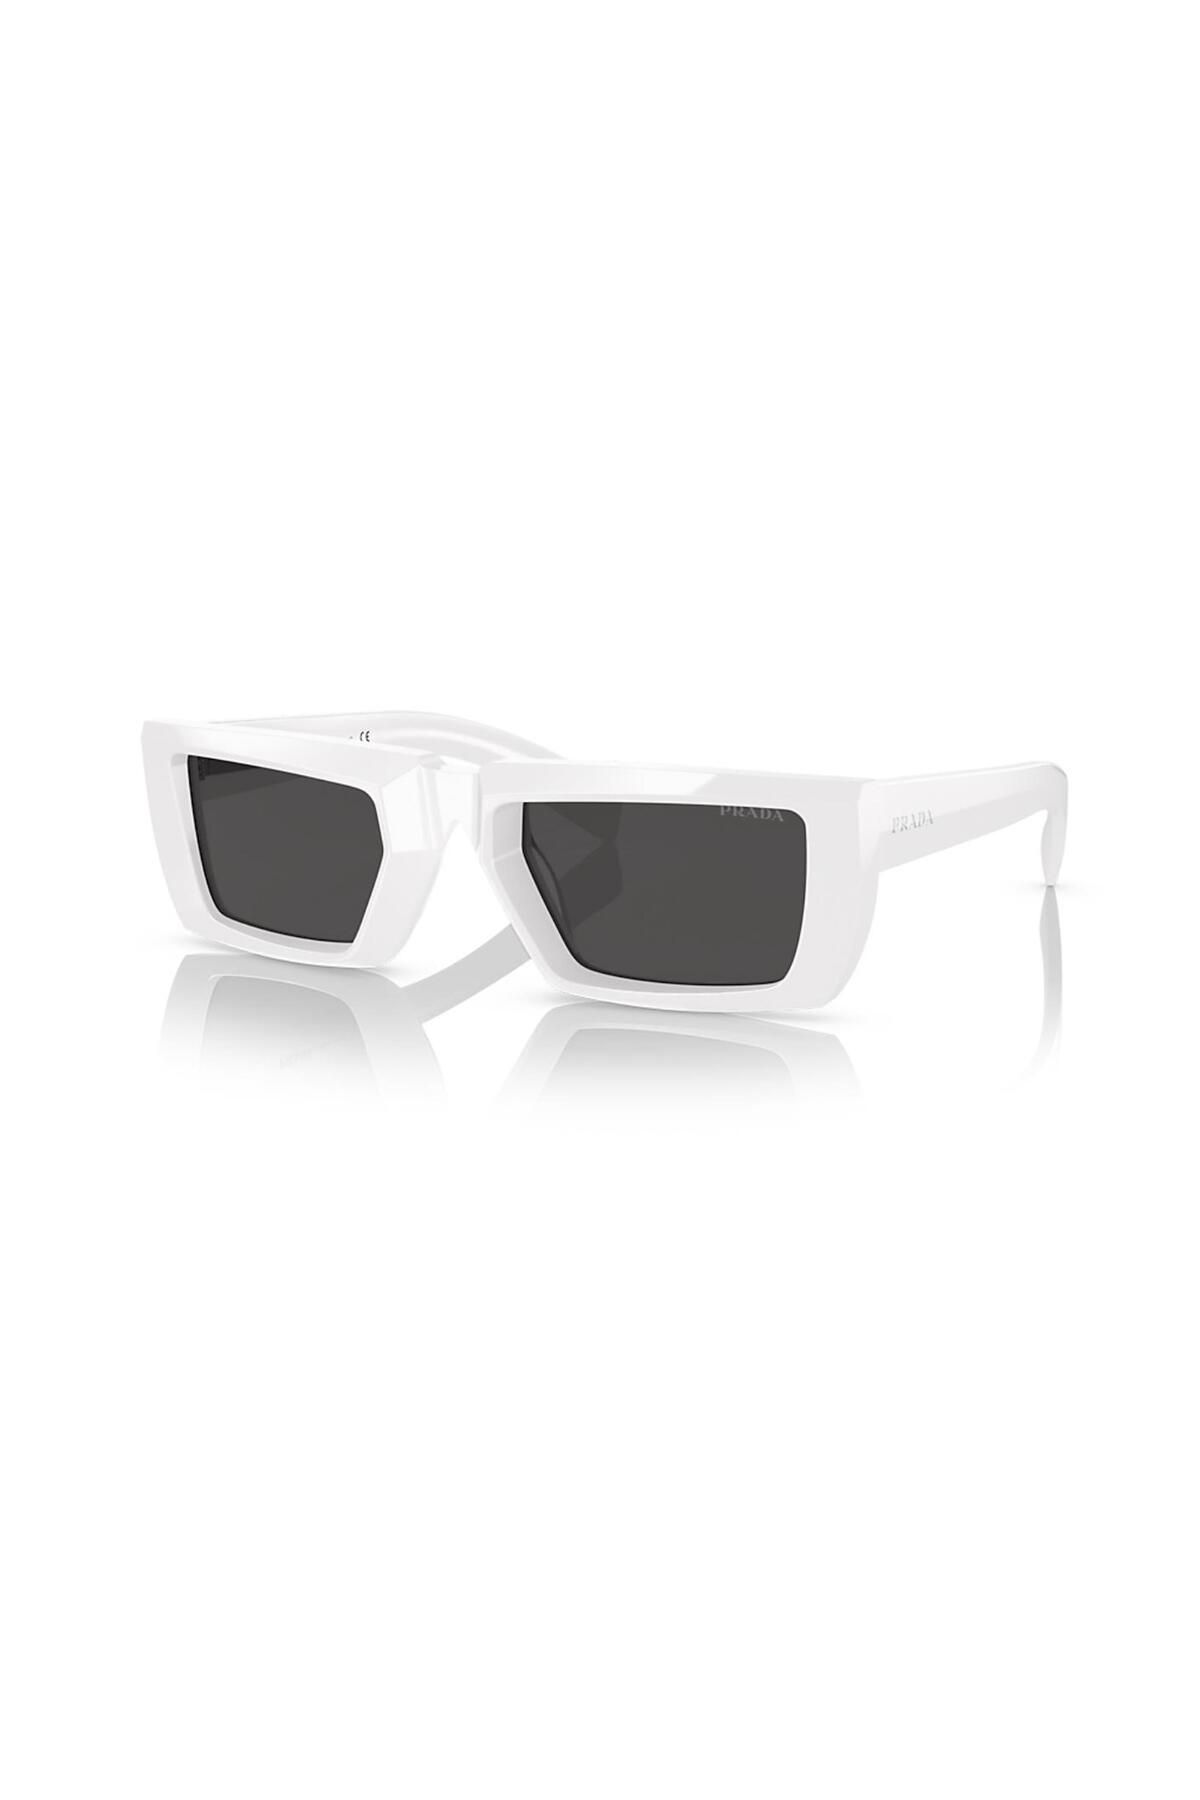 Women's Prada Geometric Sunglasses | Sunglasses, Sunglasses case, Sunglasses  accessories